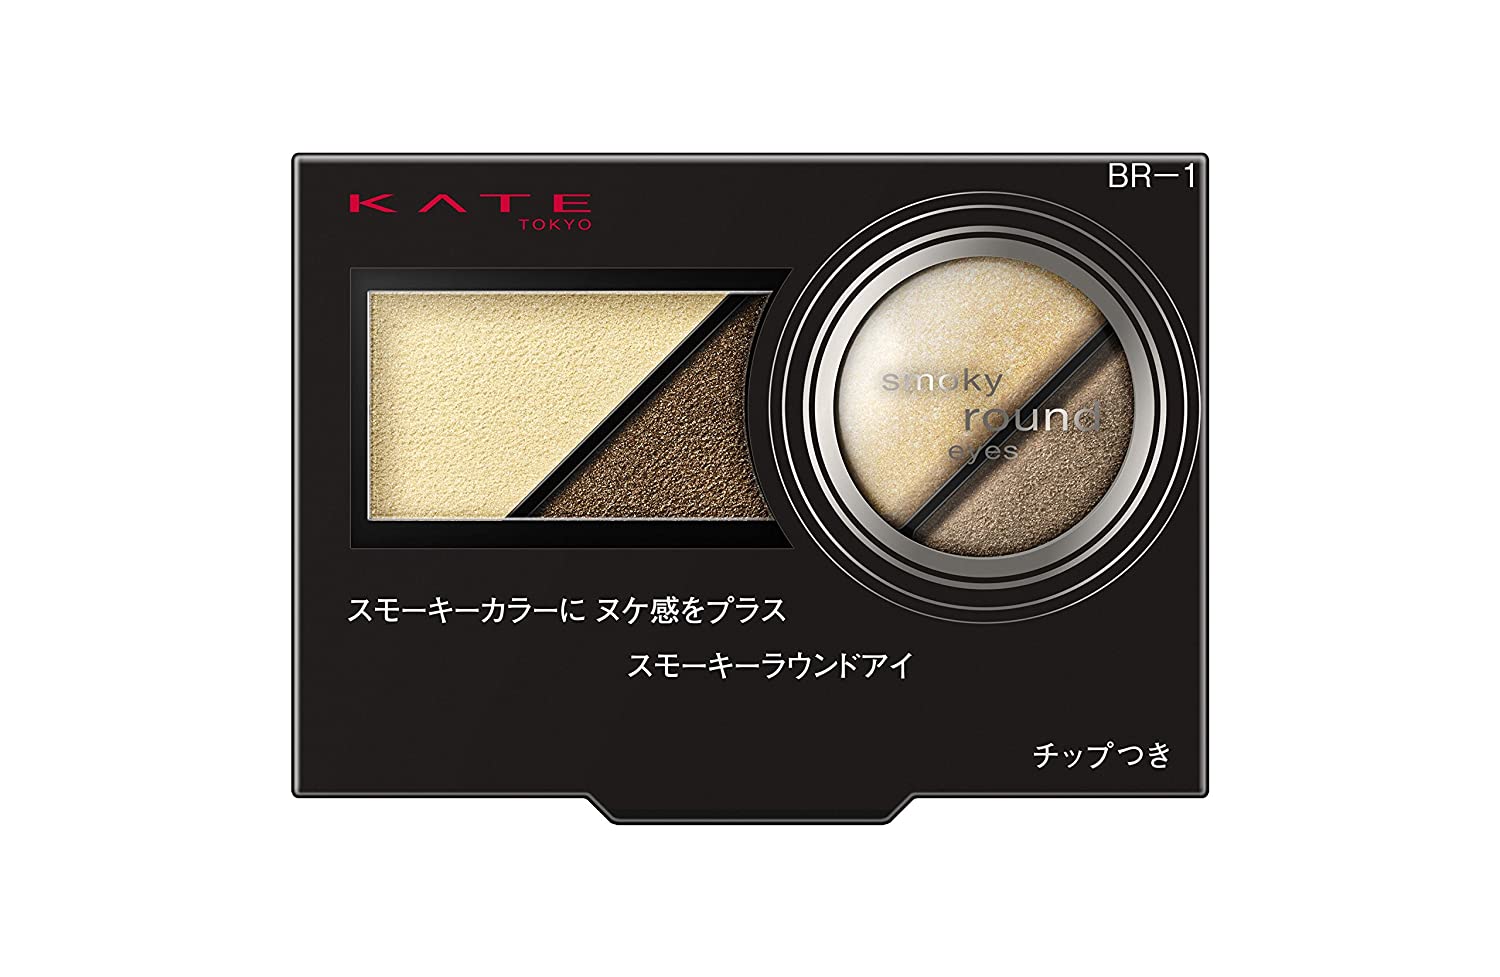 Kanebo KATE Smoky Round Eyes BR-1